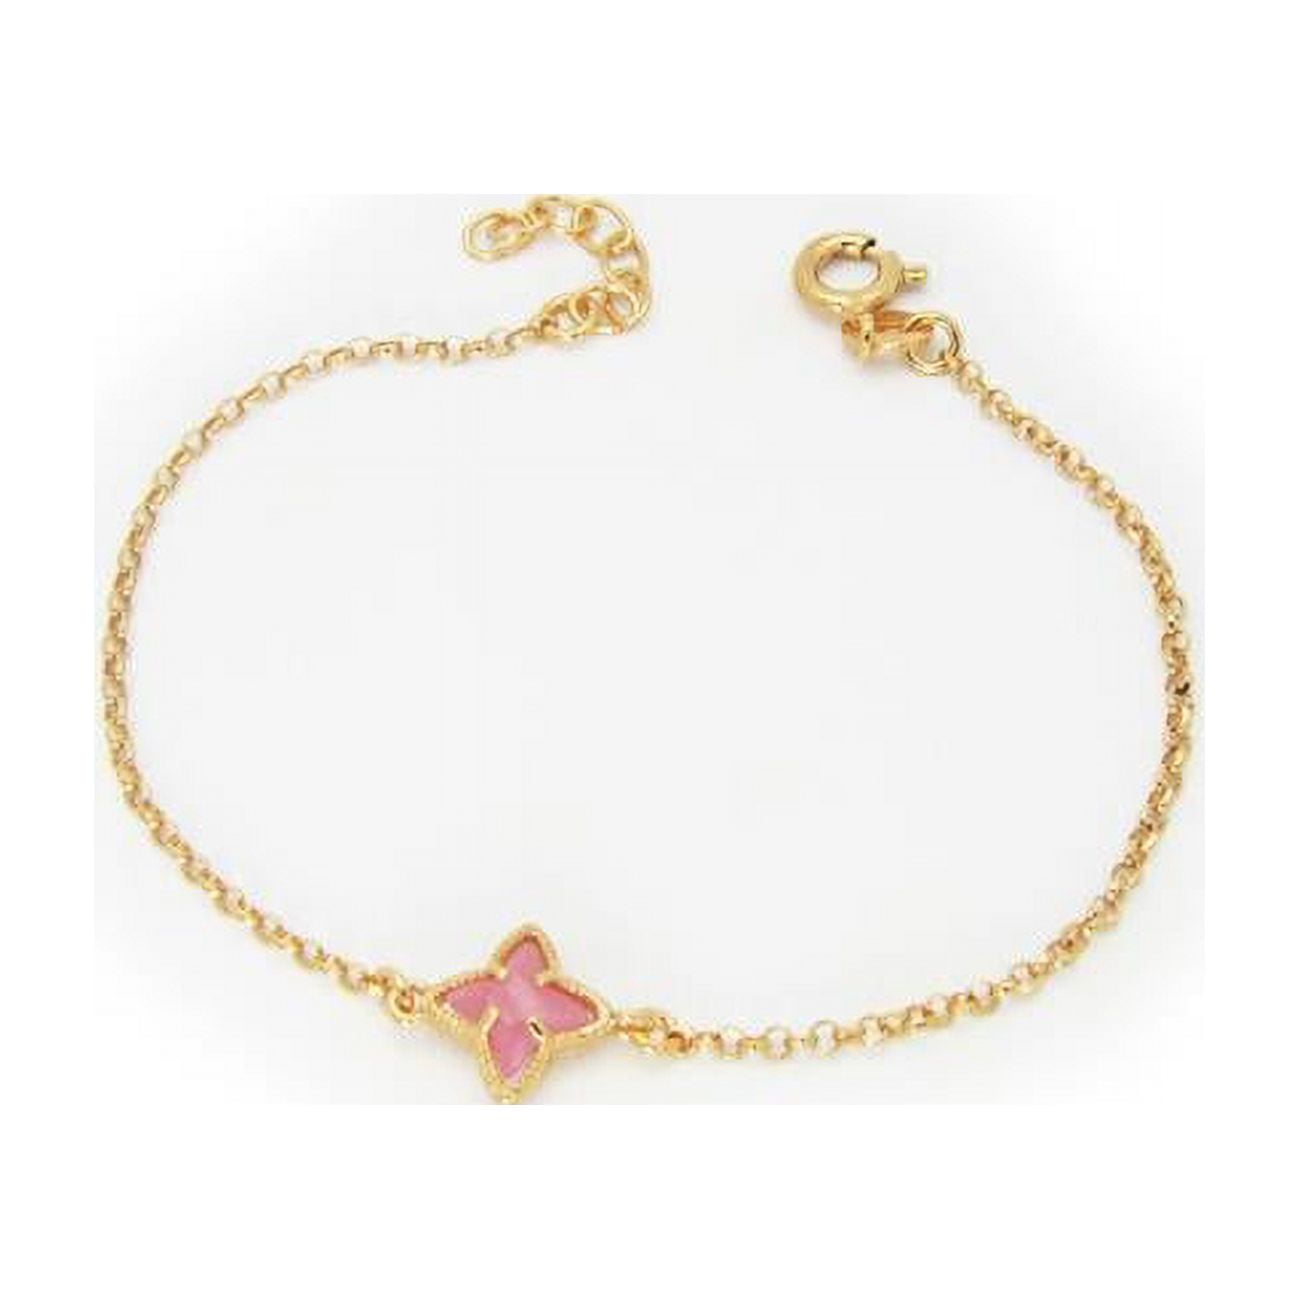 402422p 6.5 In. Flamingo Pink Flower Crystal Bracelet In 925 Sterling Silver